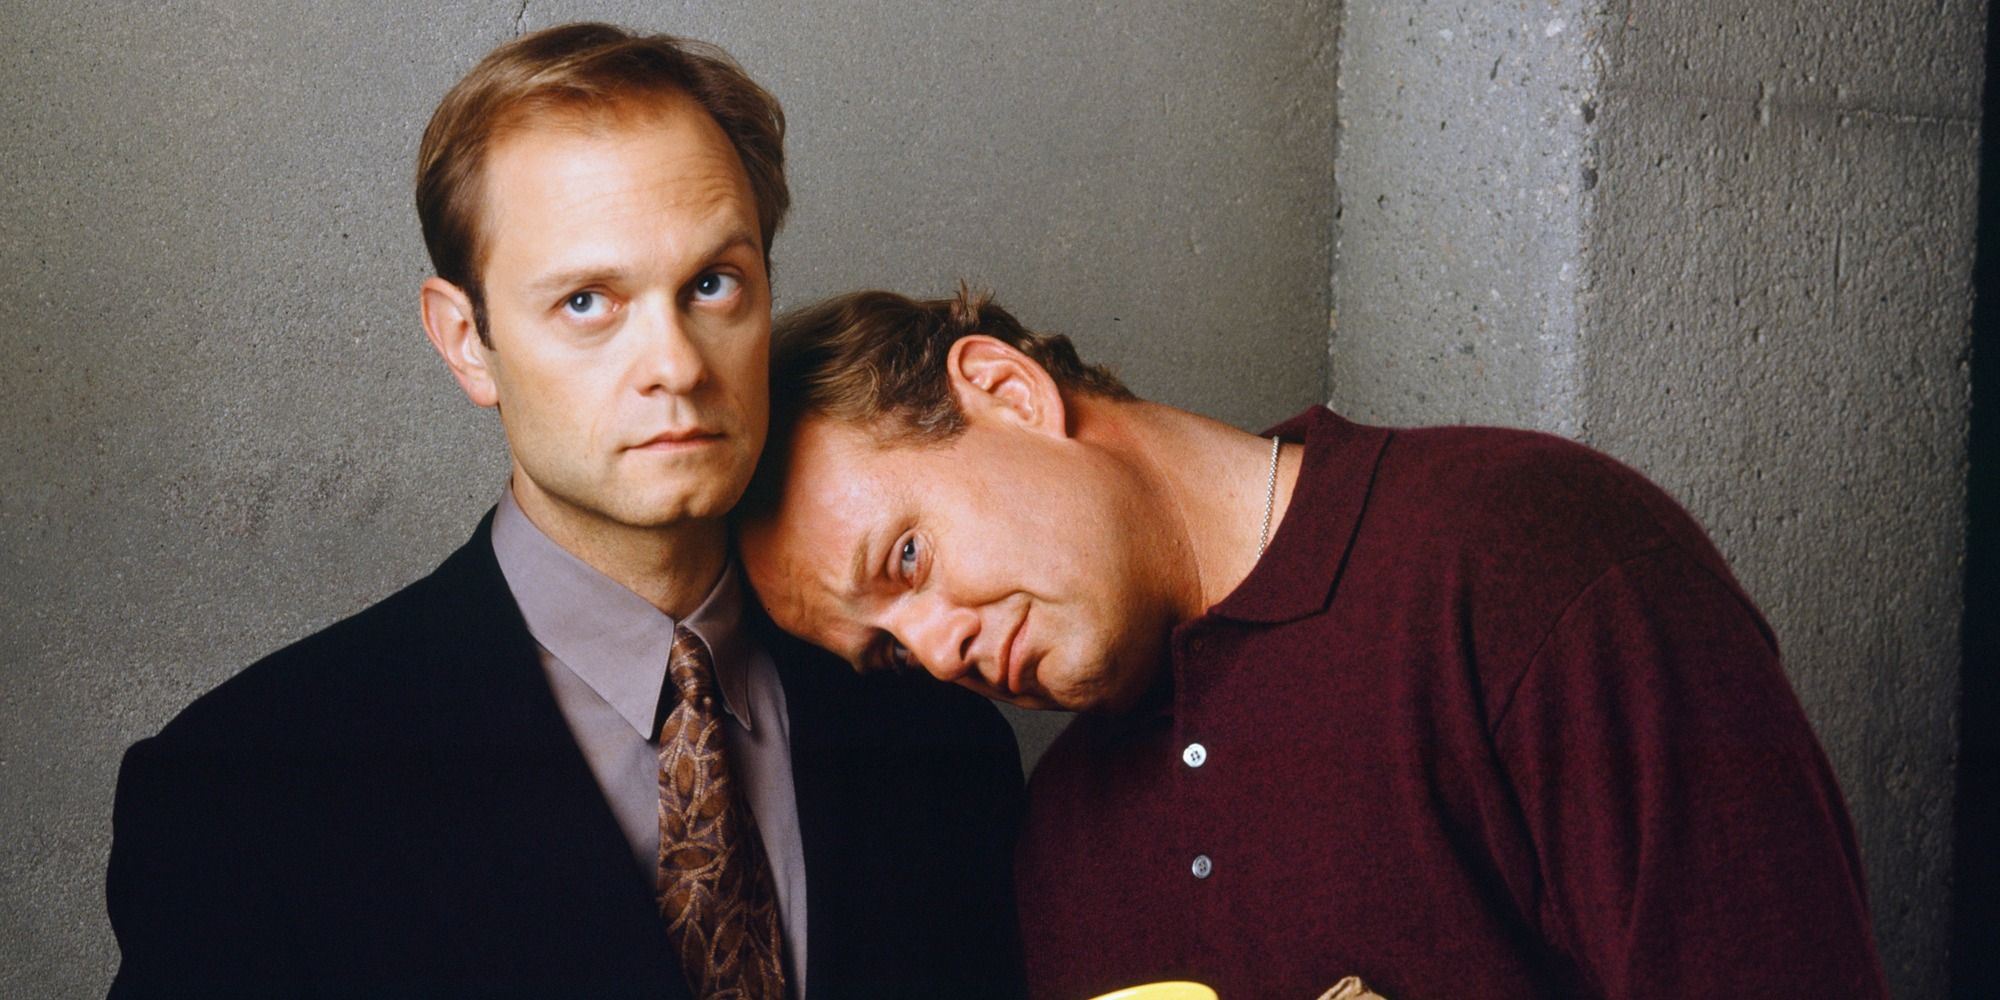 Frasier leaning on Niles' shoulder in a promo image for Frasier